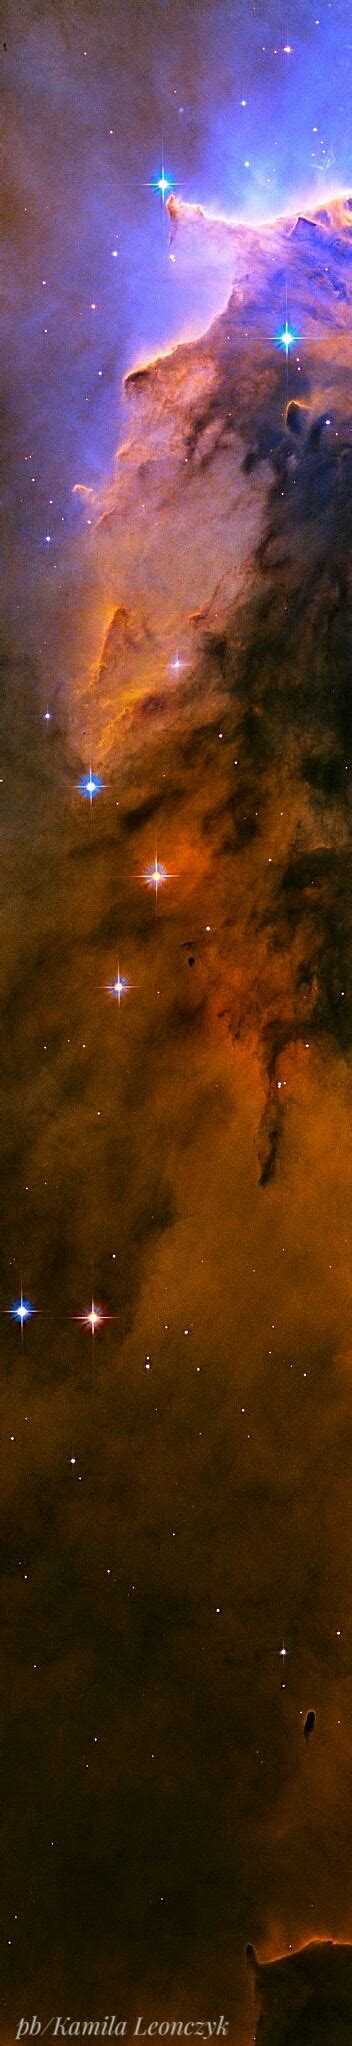 The Fairy Of Eagle Nebula The Greater Eagle Nebula M16 Is Actually